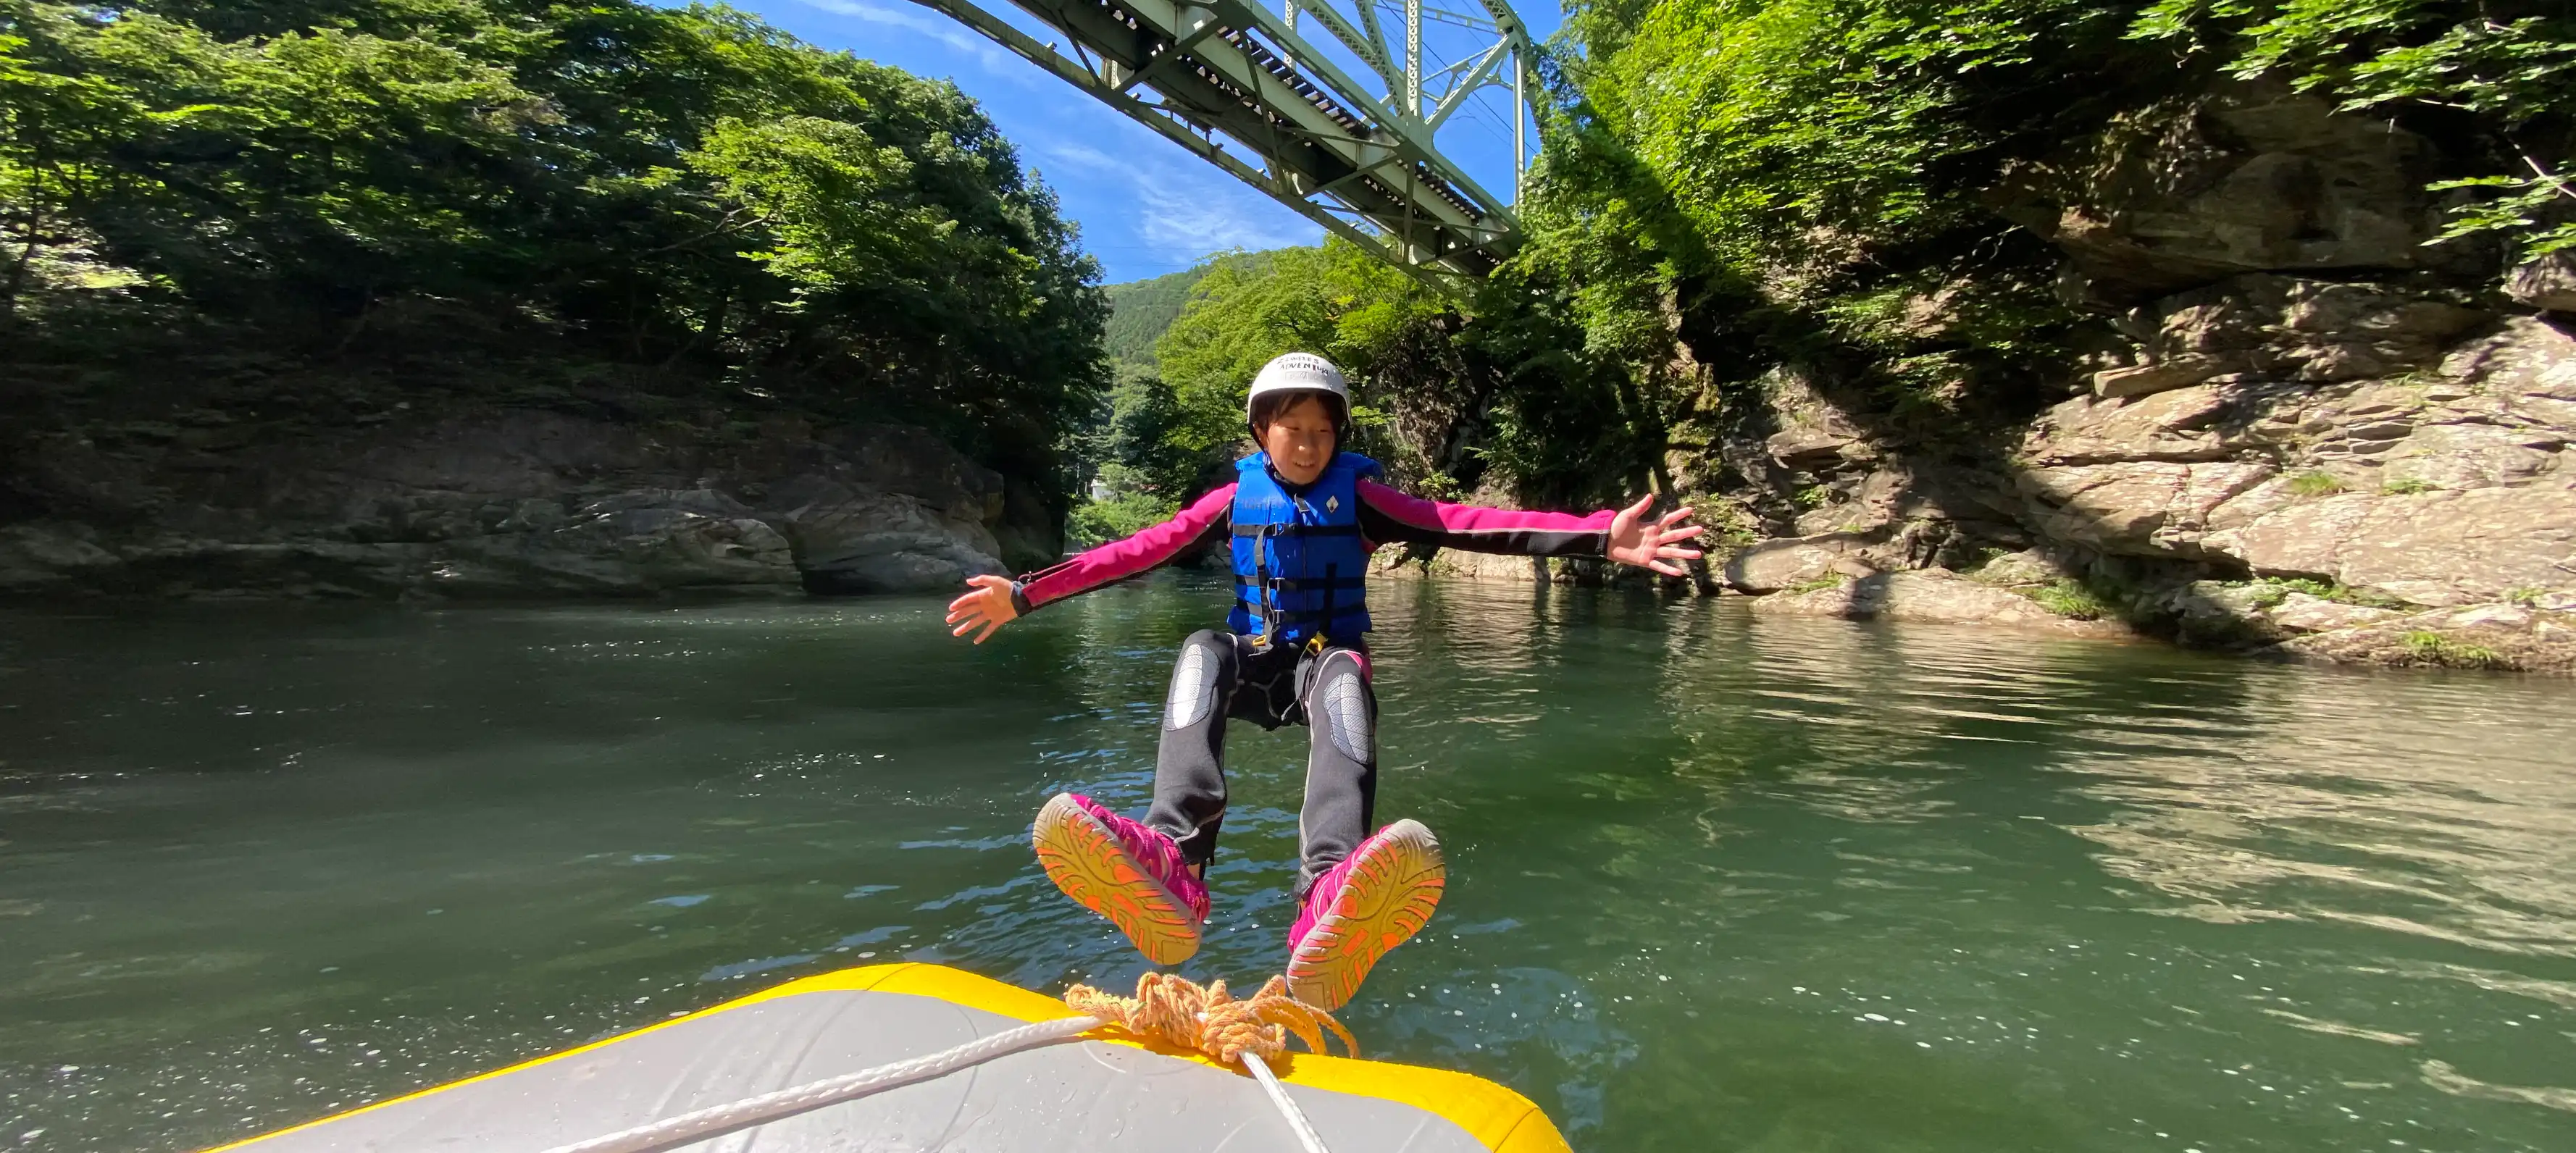 Minakami Best Half Day Rafting trip in tone river, 利根川でのみなかみベスト半日ラフティング旅行,水上ラフティング,みなかみラフティング 